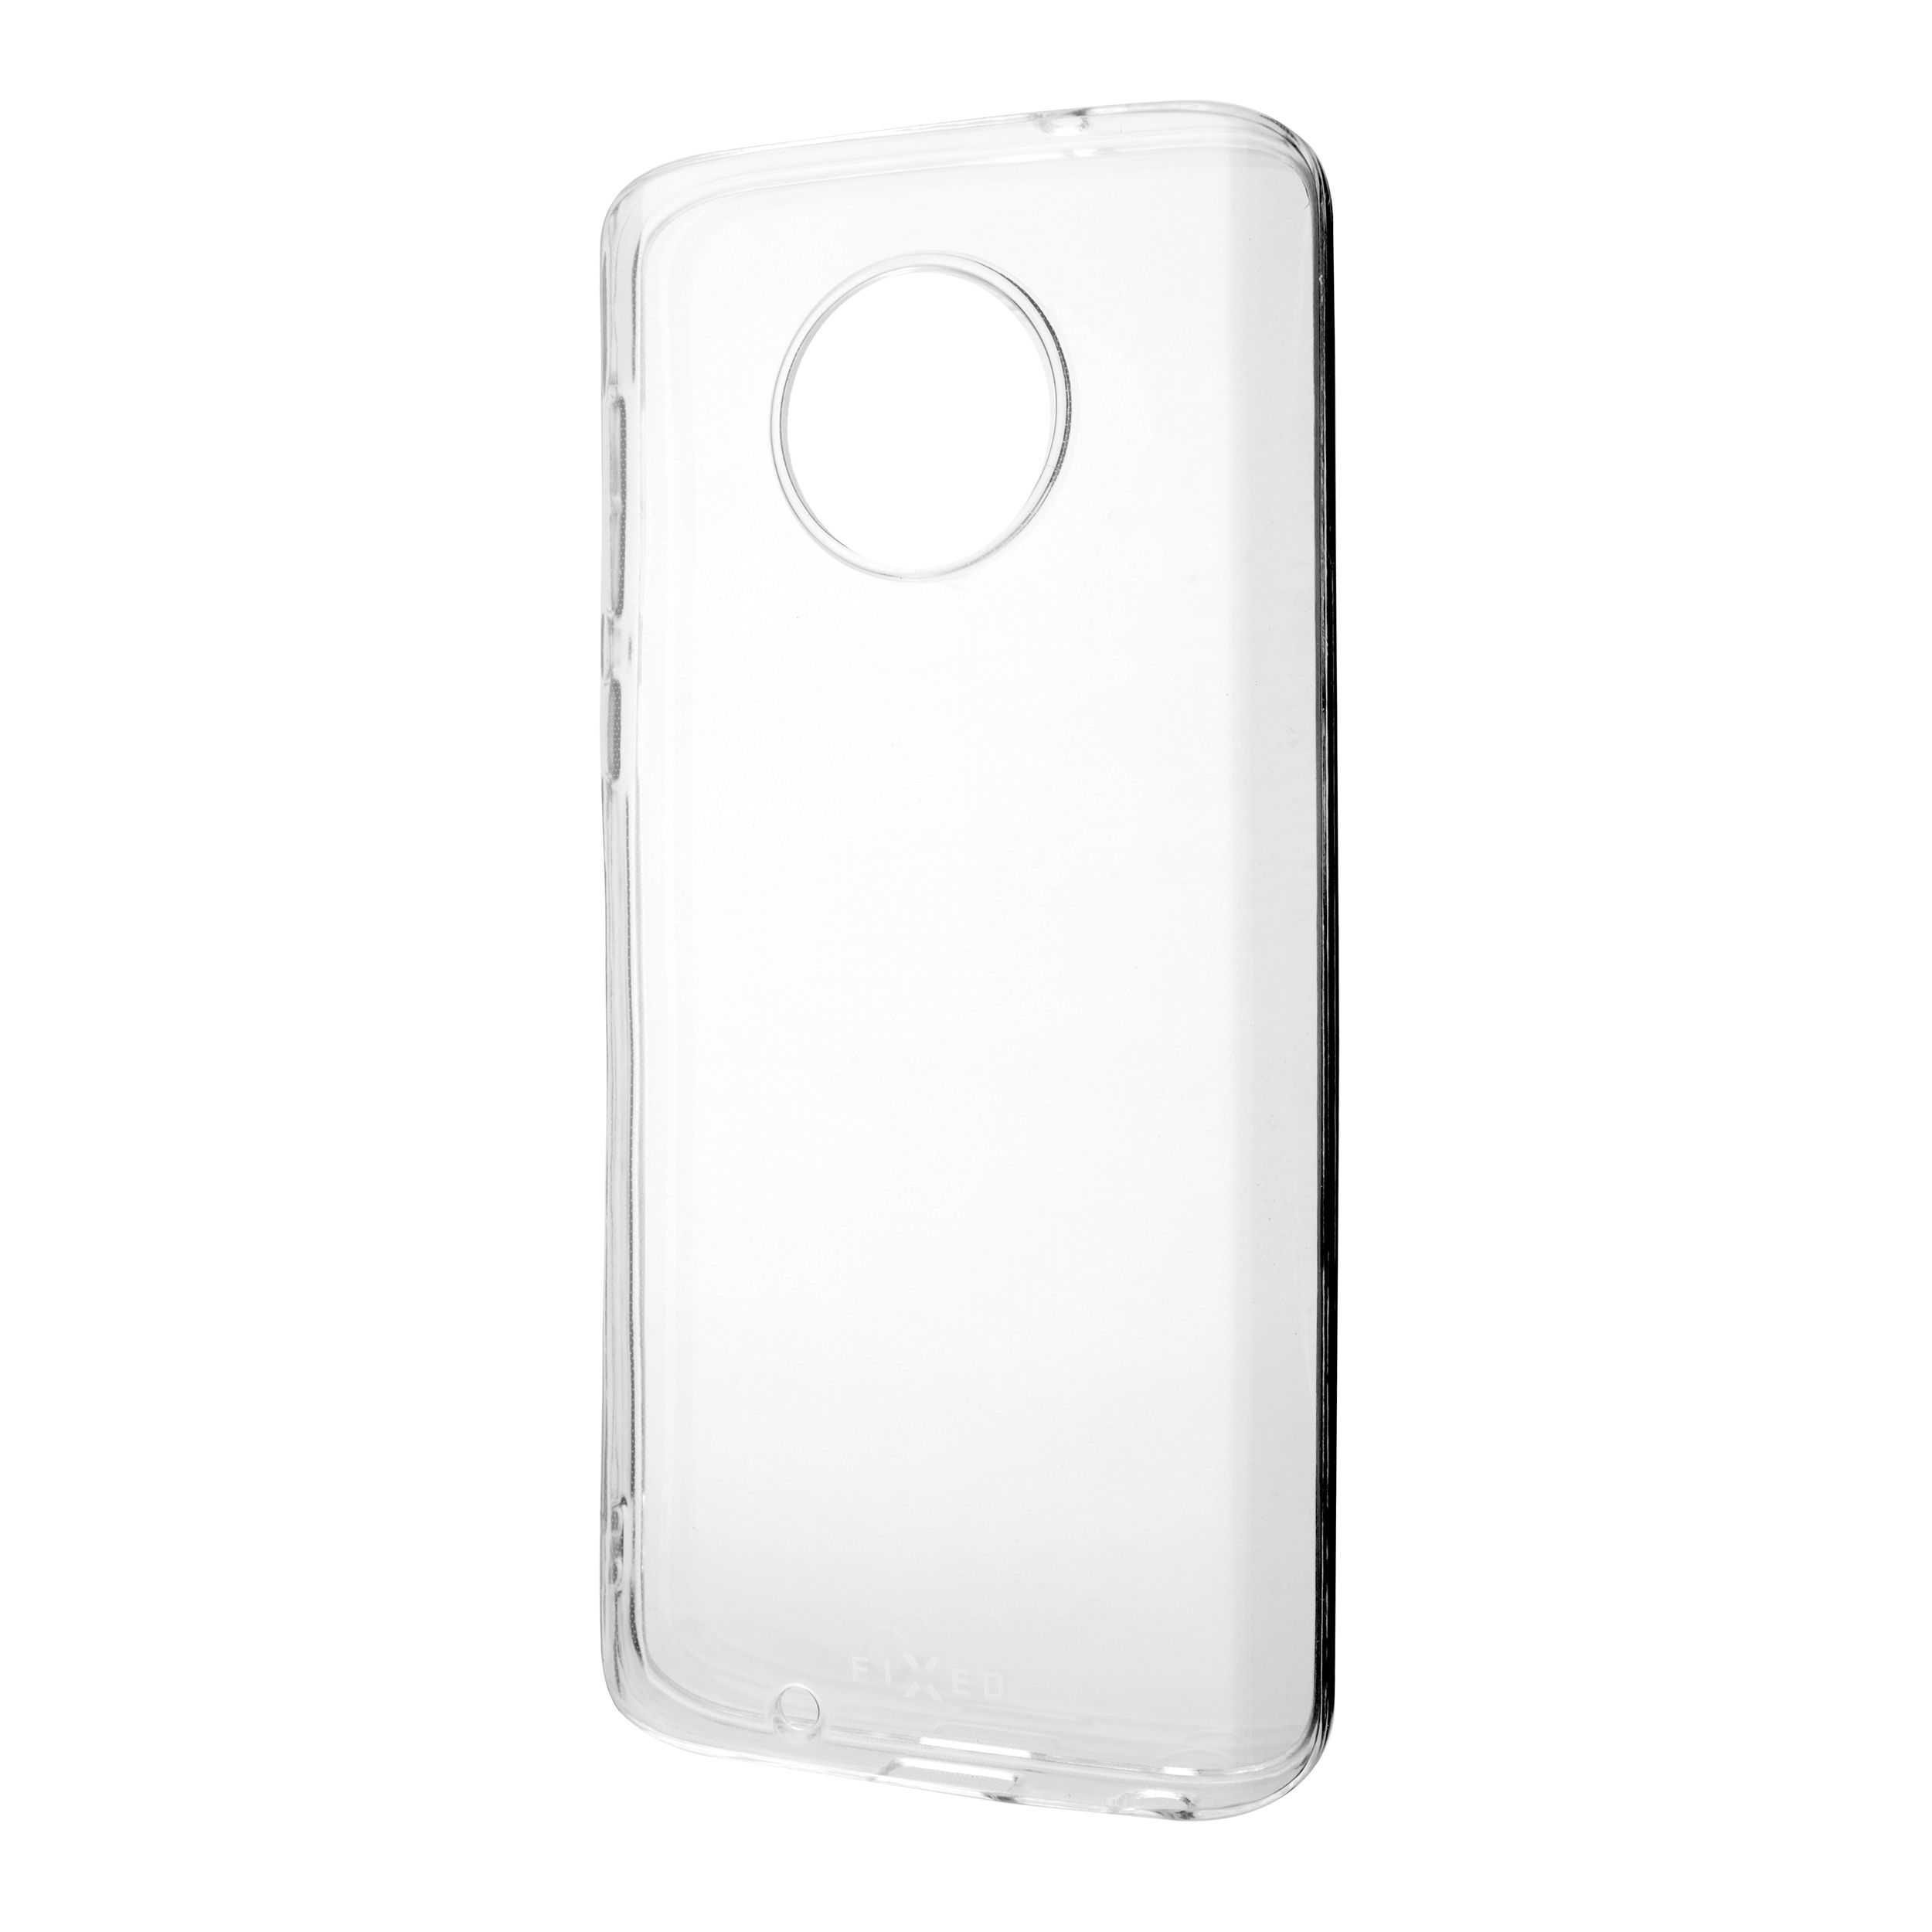 Silikonové pouzdro FIXED pro Motorola Moto G6, čiré